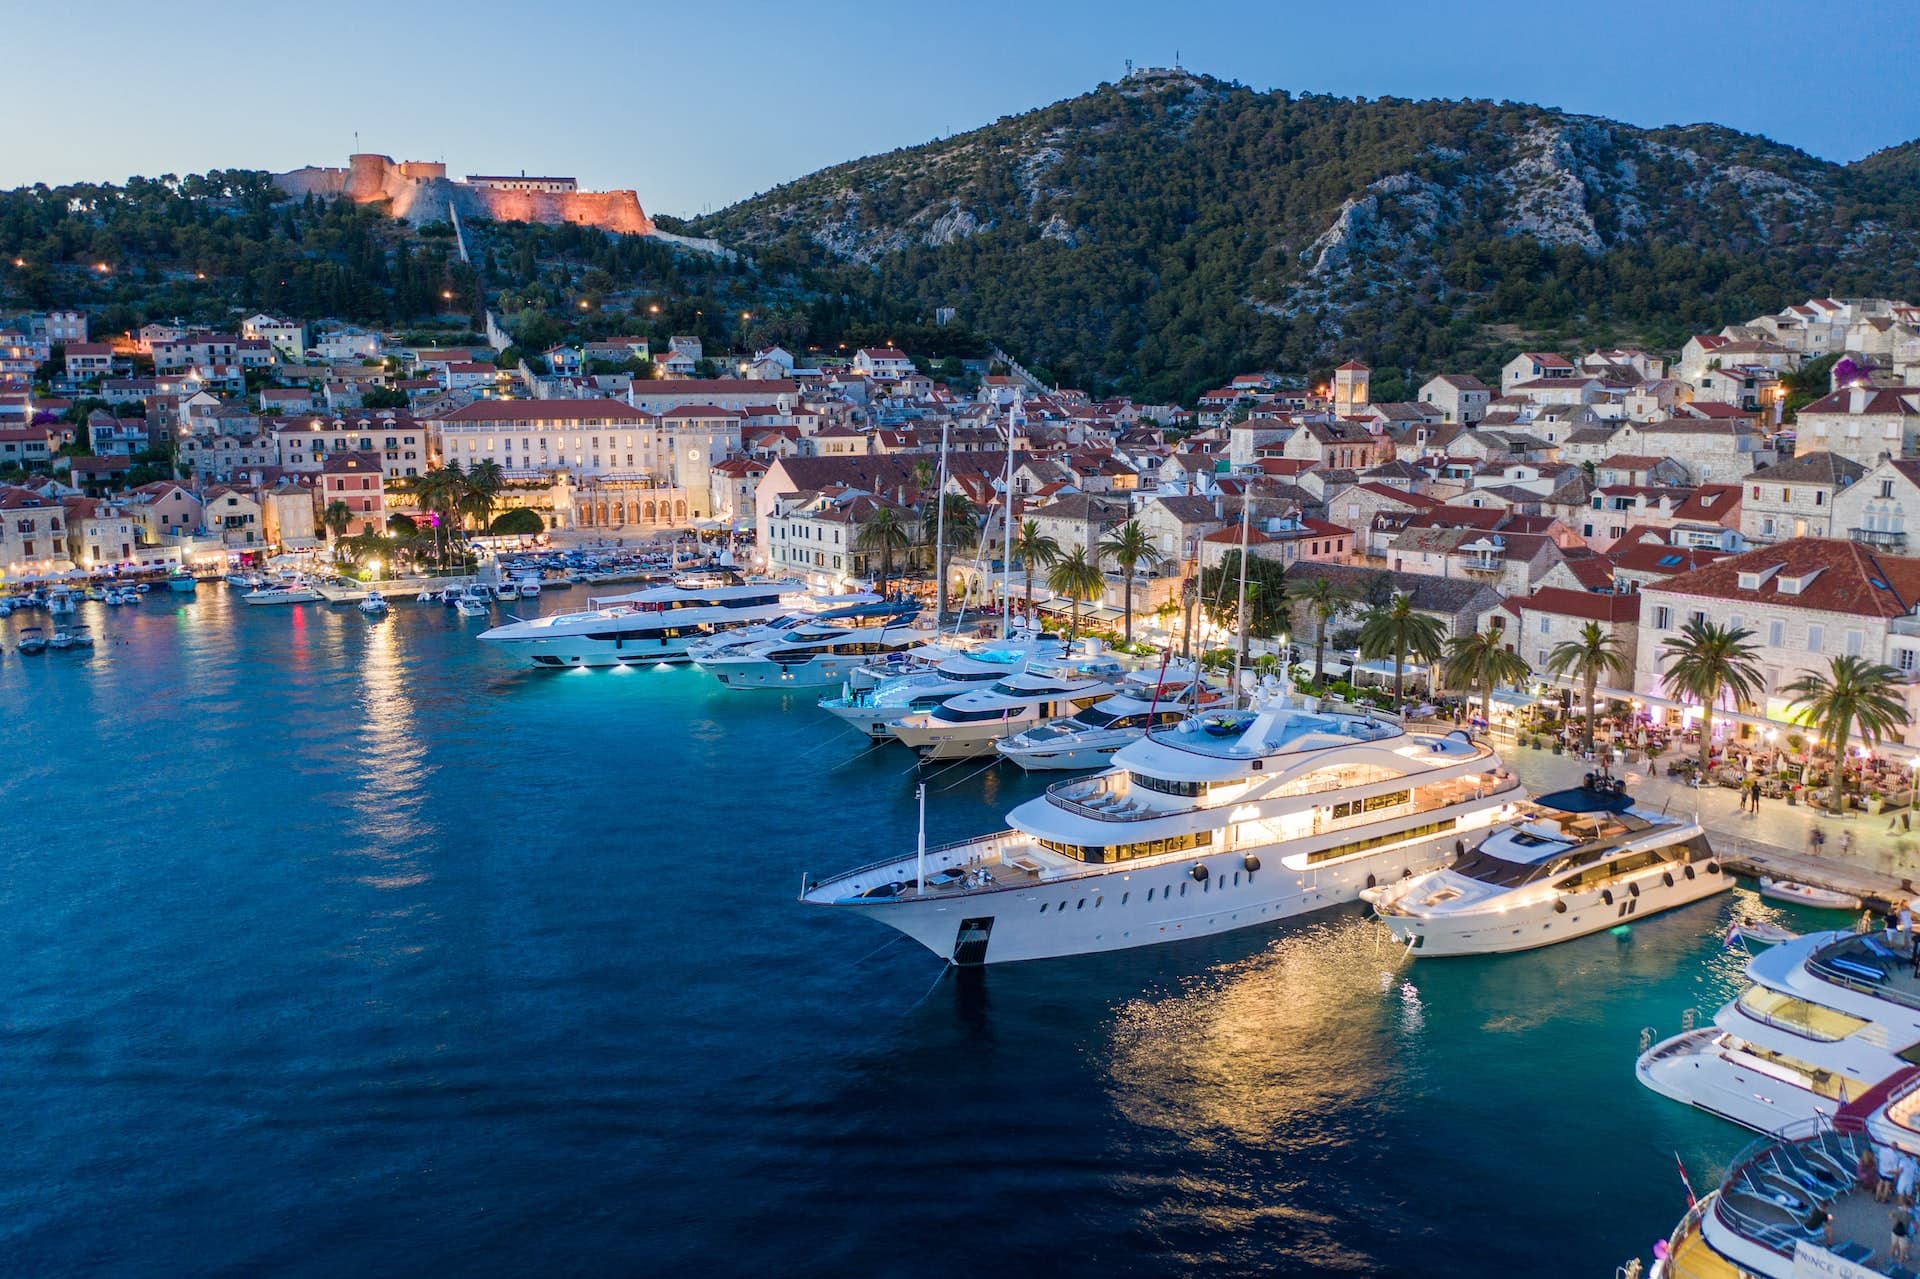 Marina full of superyachts for yacht share in Hvar, Croatia